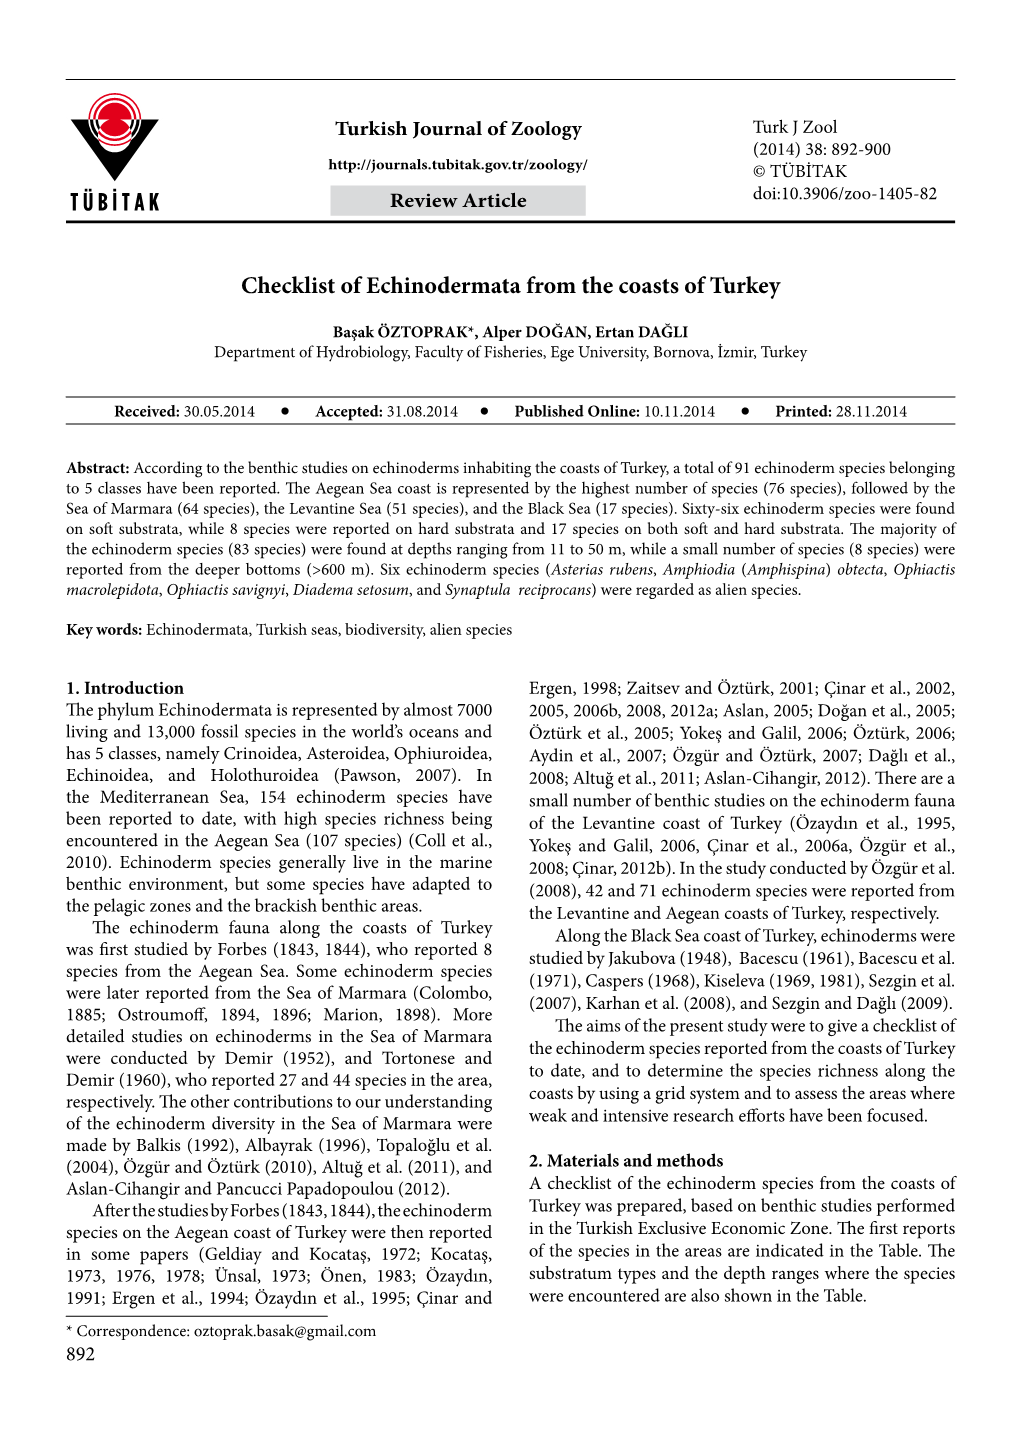 Checklist of Echinodermata from the Coasts of Turkey